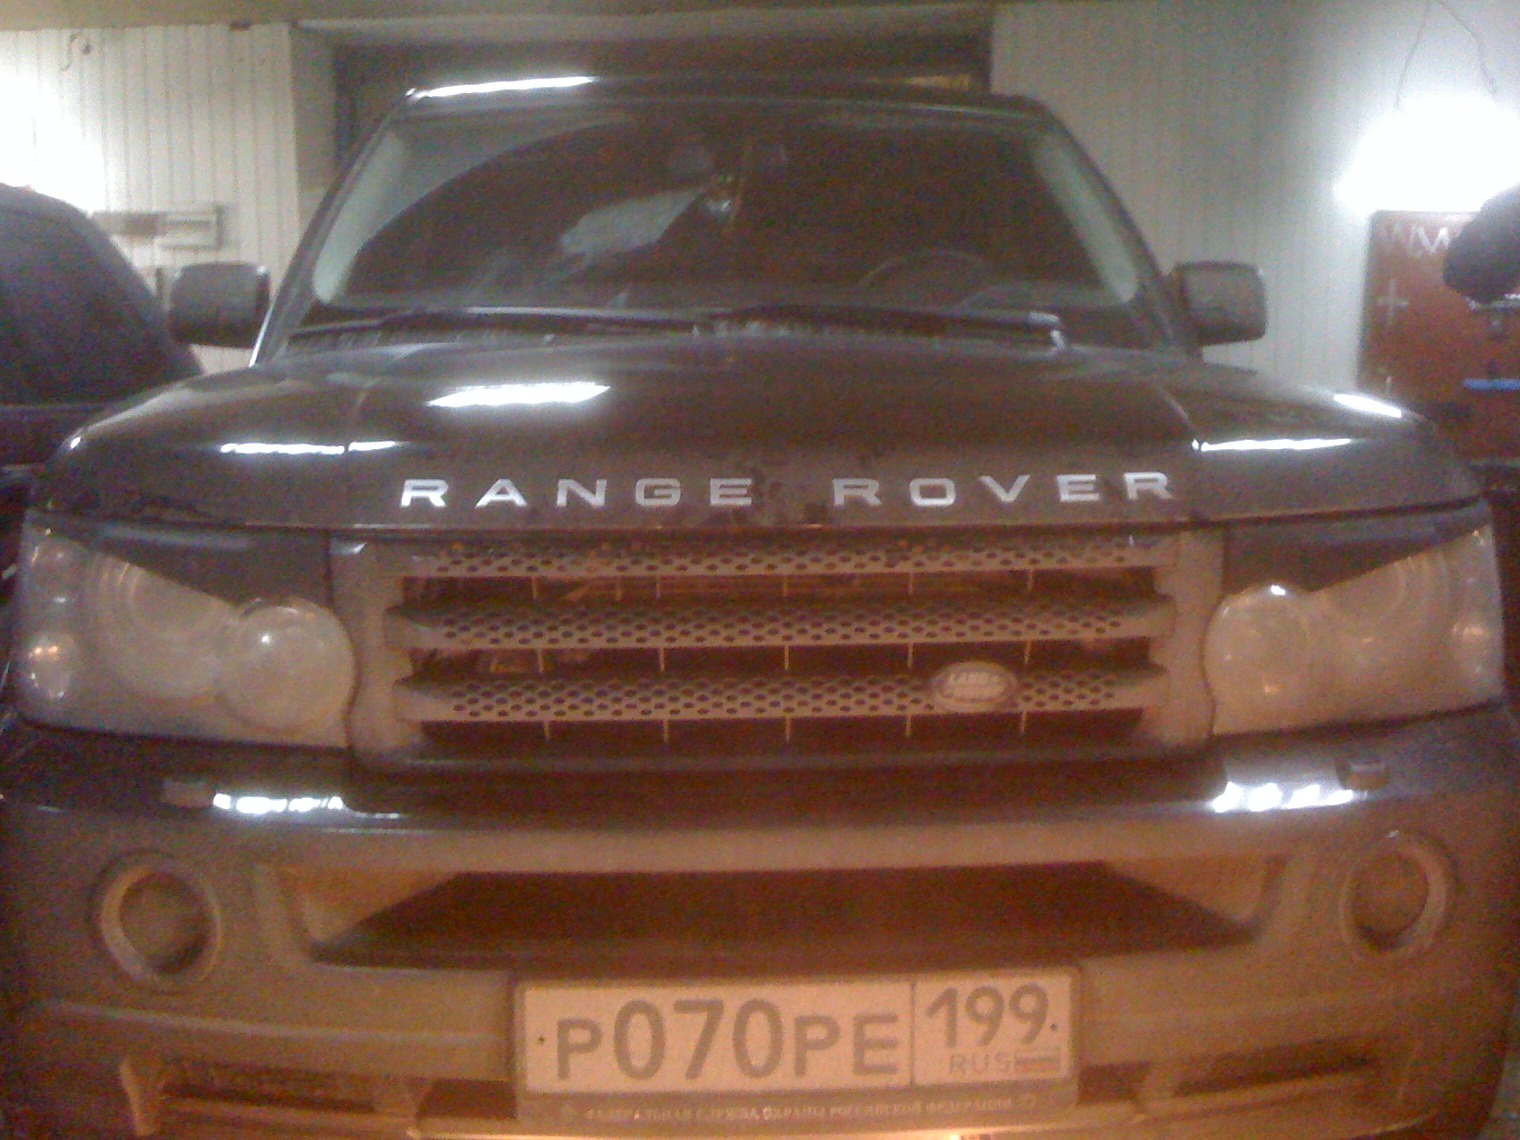    RANGE ROVER Toyota Corona EXiV 20 1995